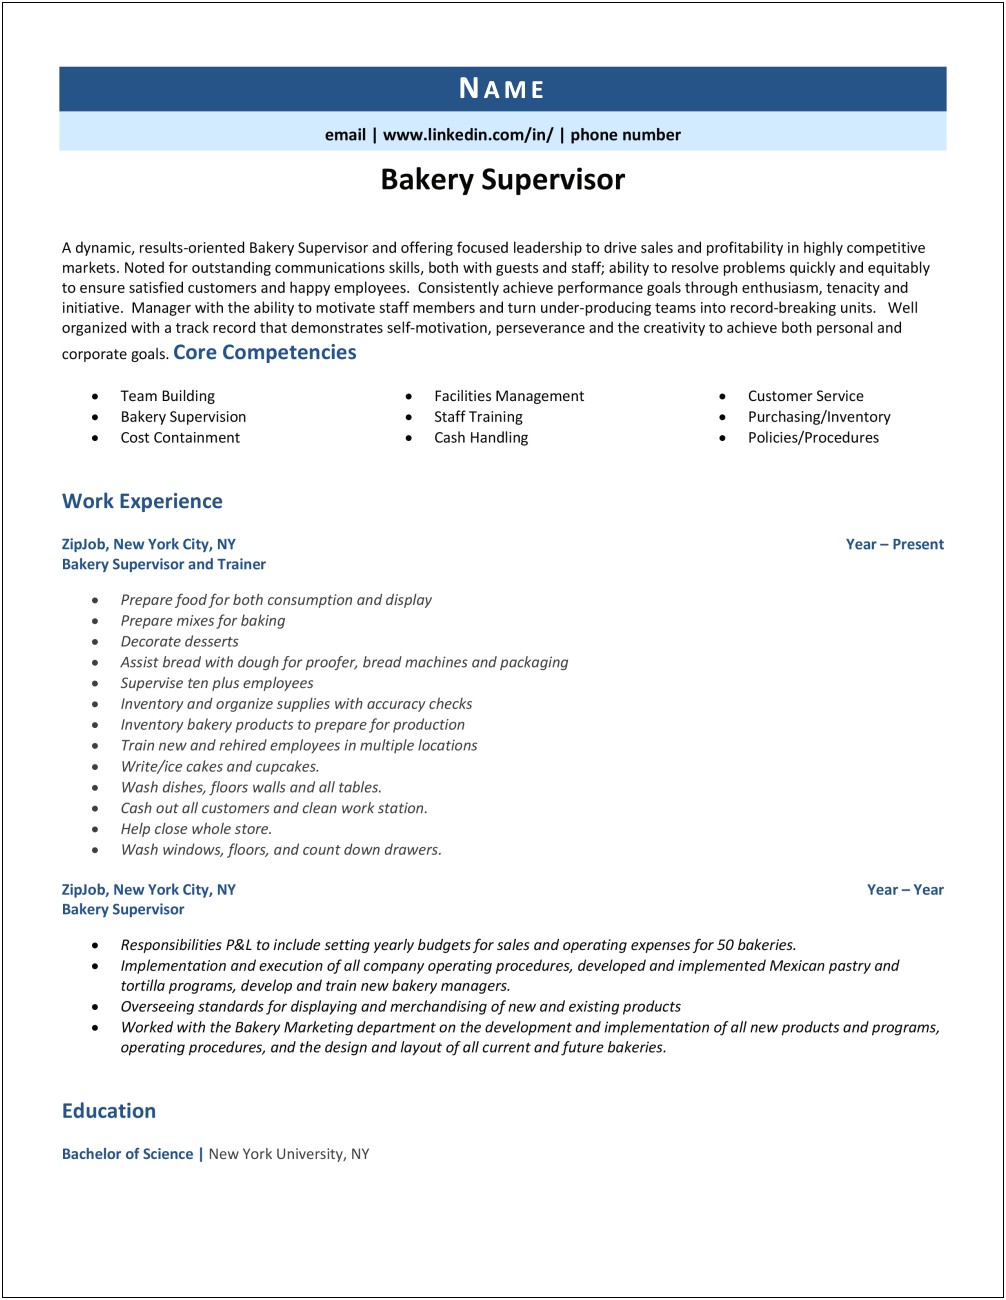 Bakery Manager Job Description For Resume